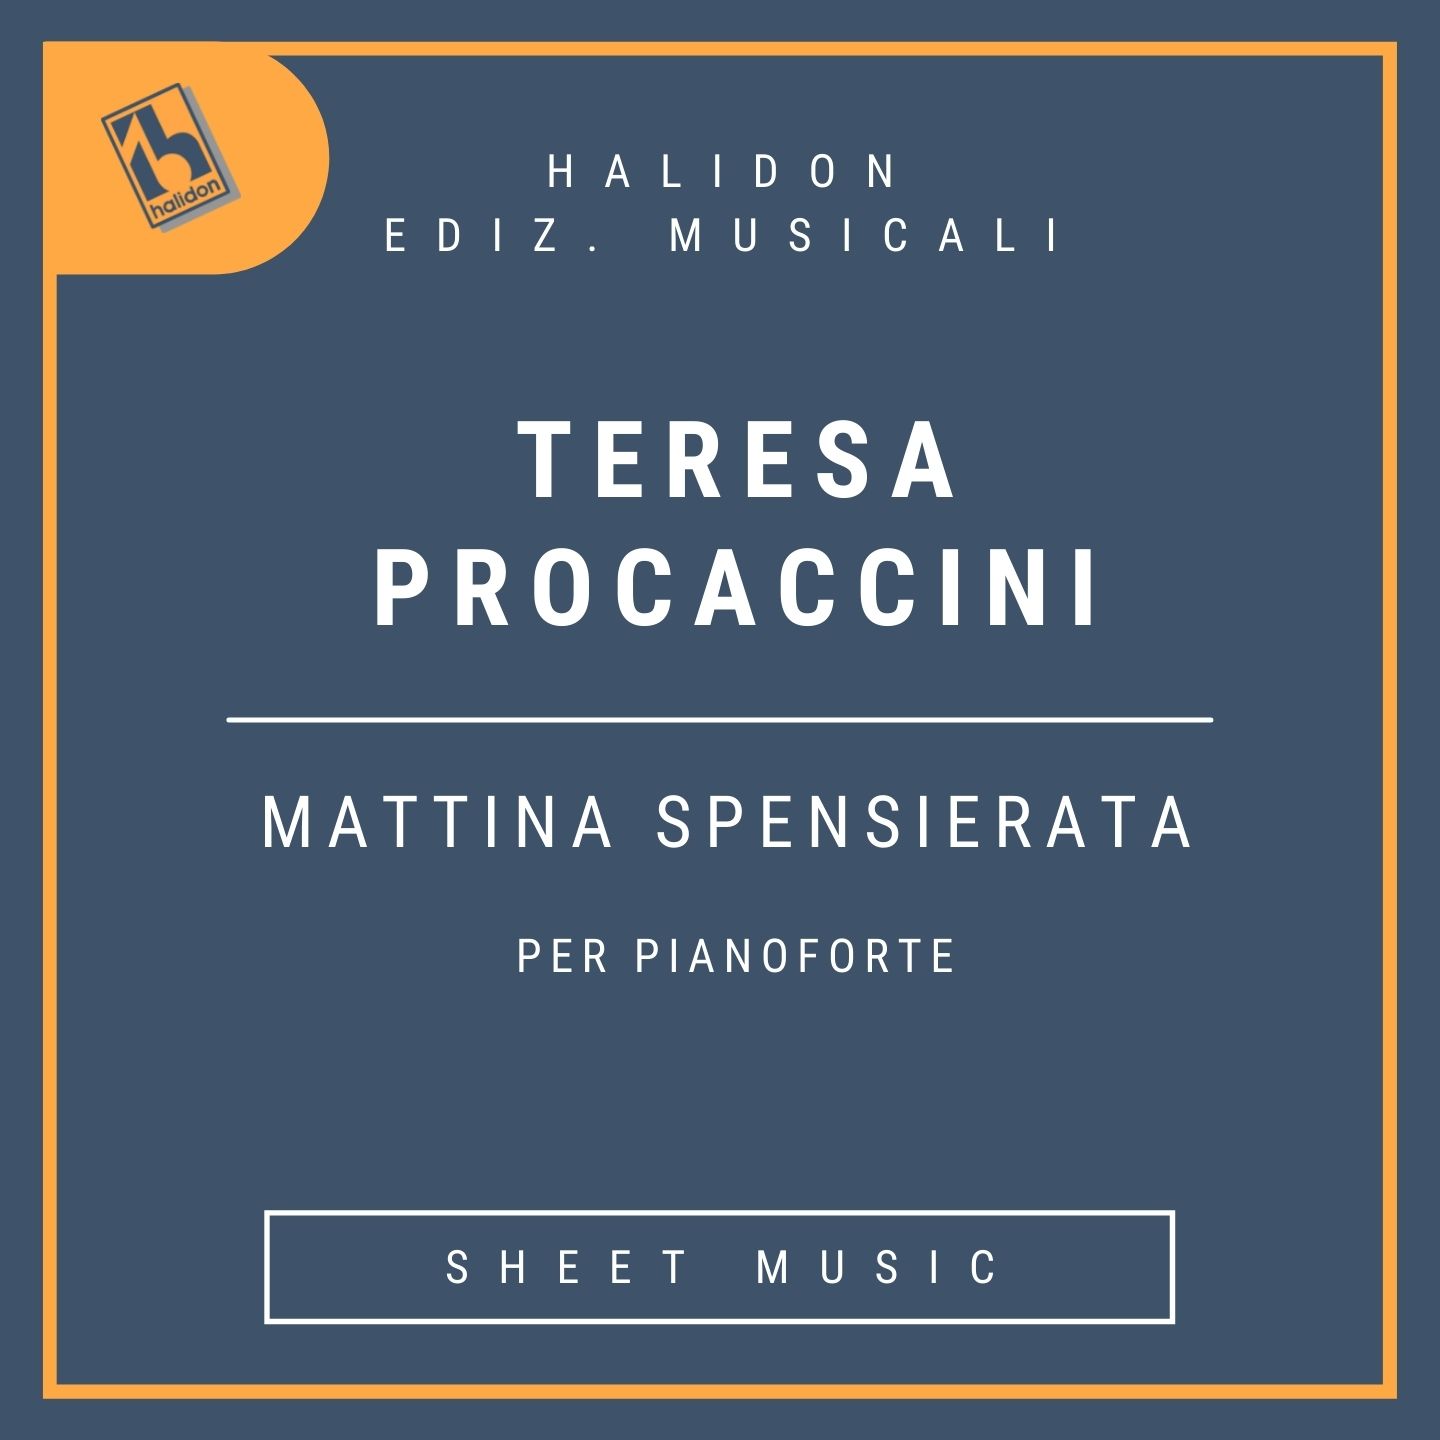 Teresa Procaccini - Mattina spensierata